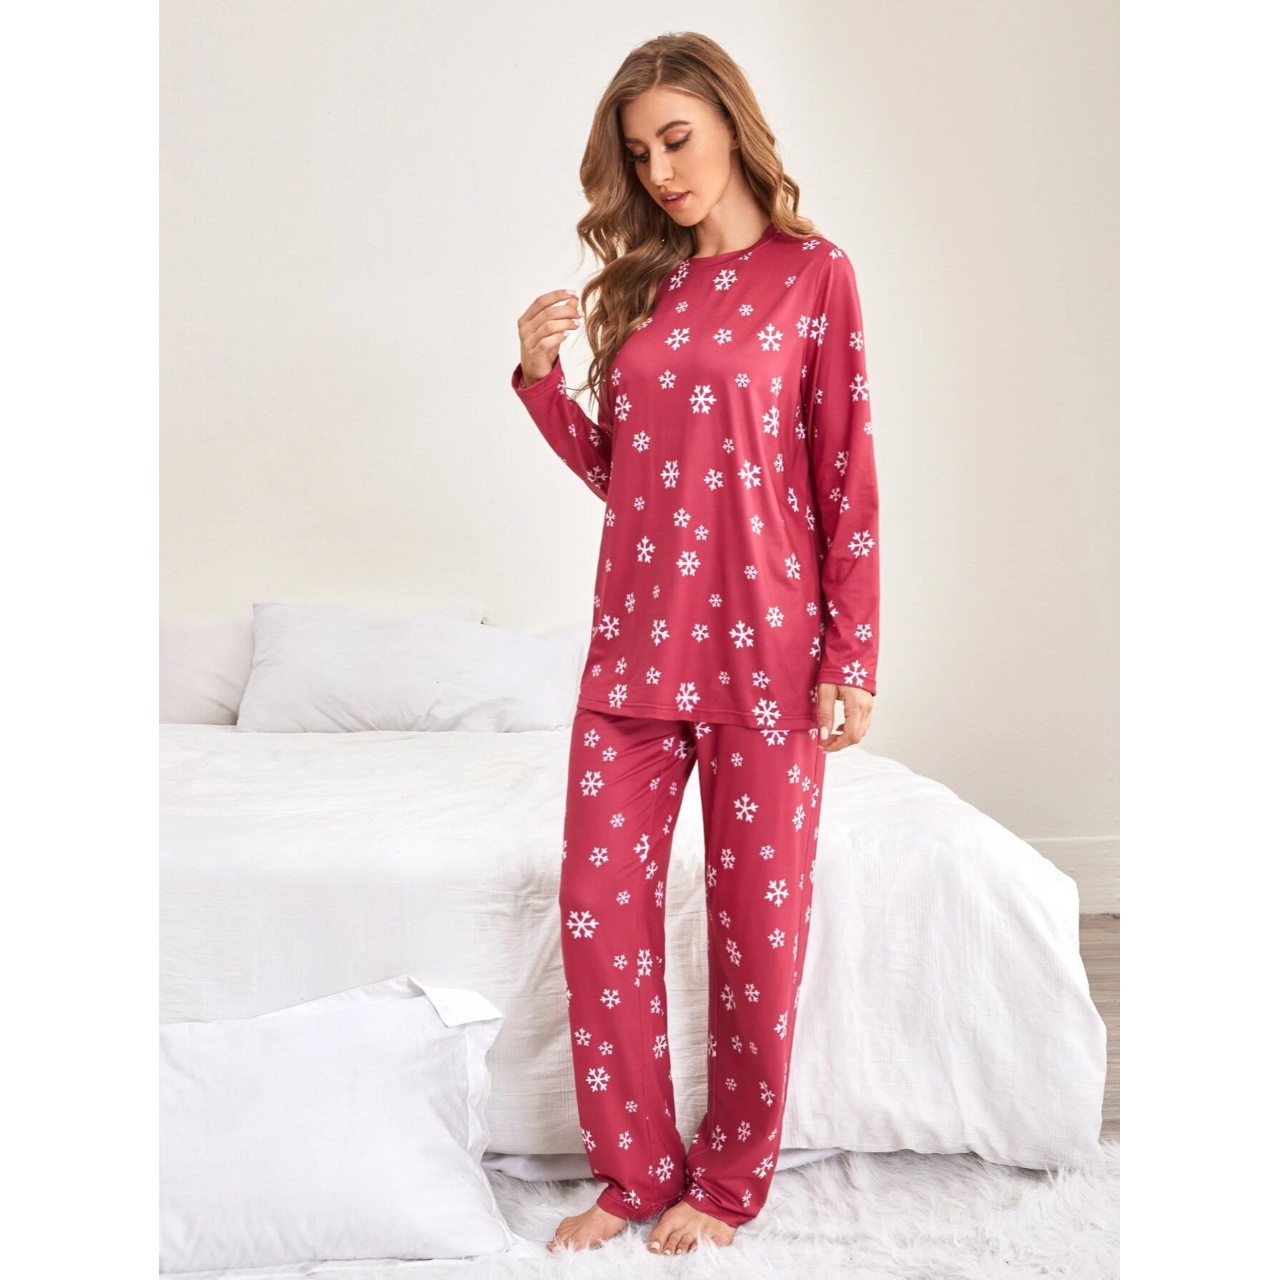 Allover snowflake print pajama set s